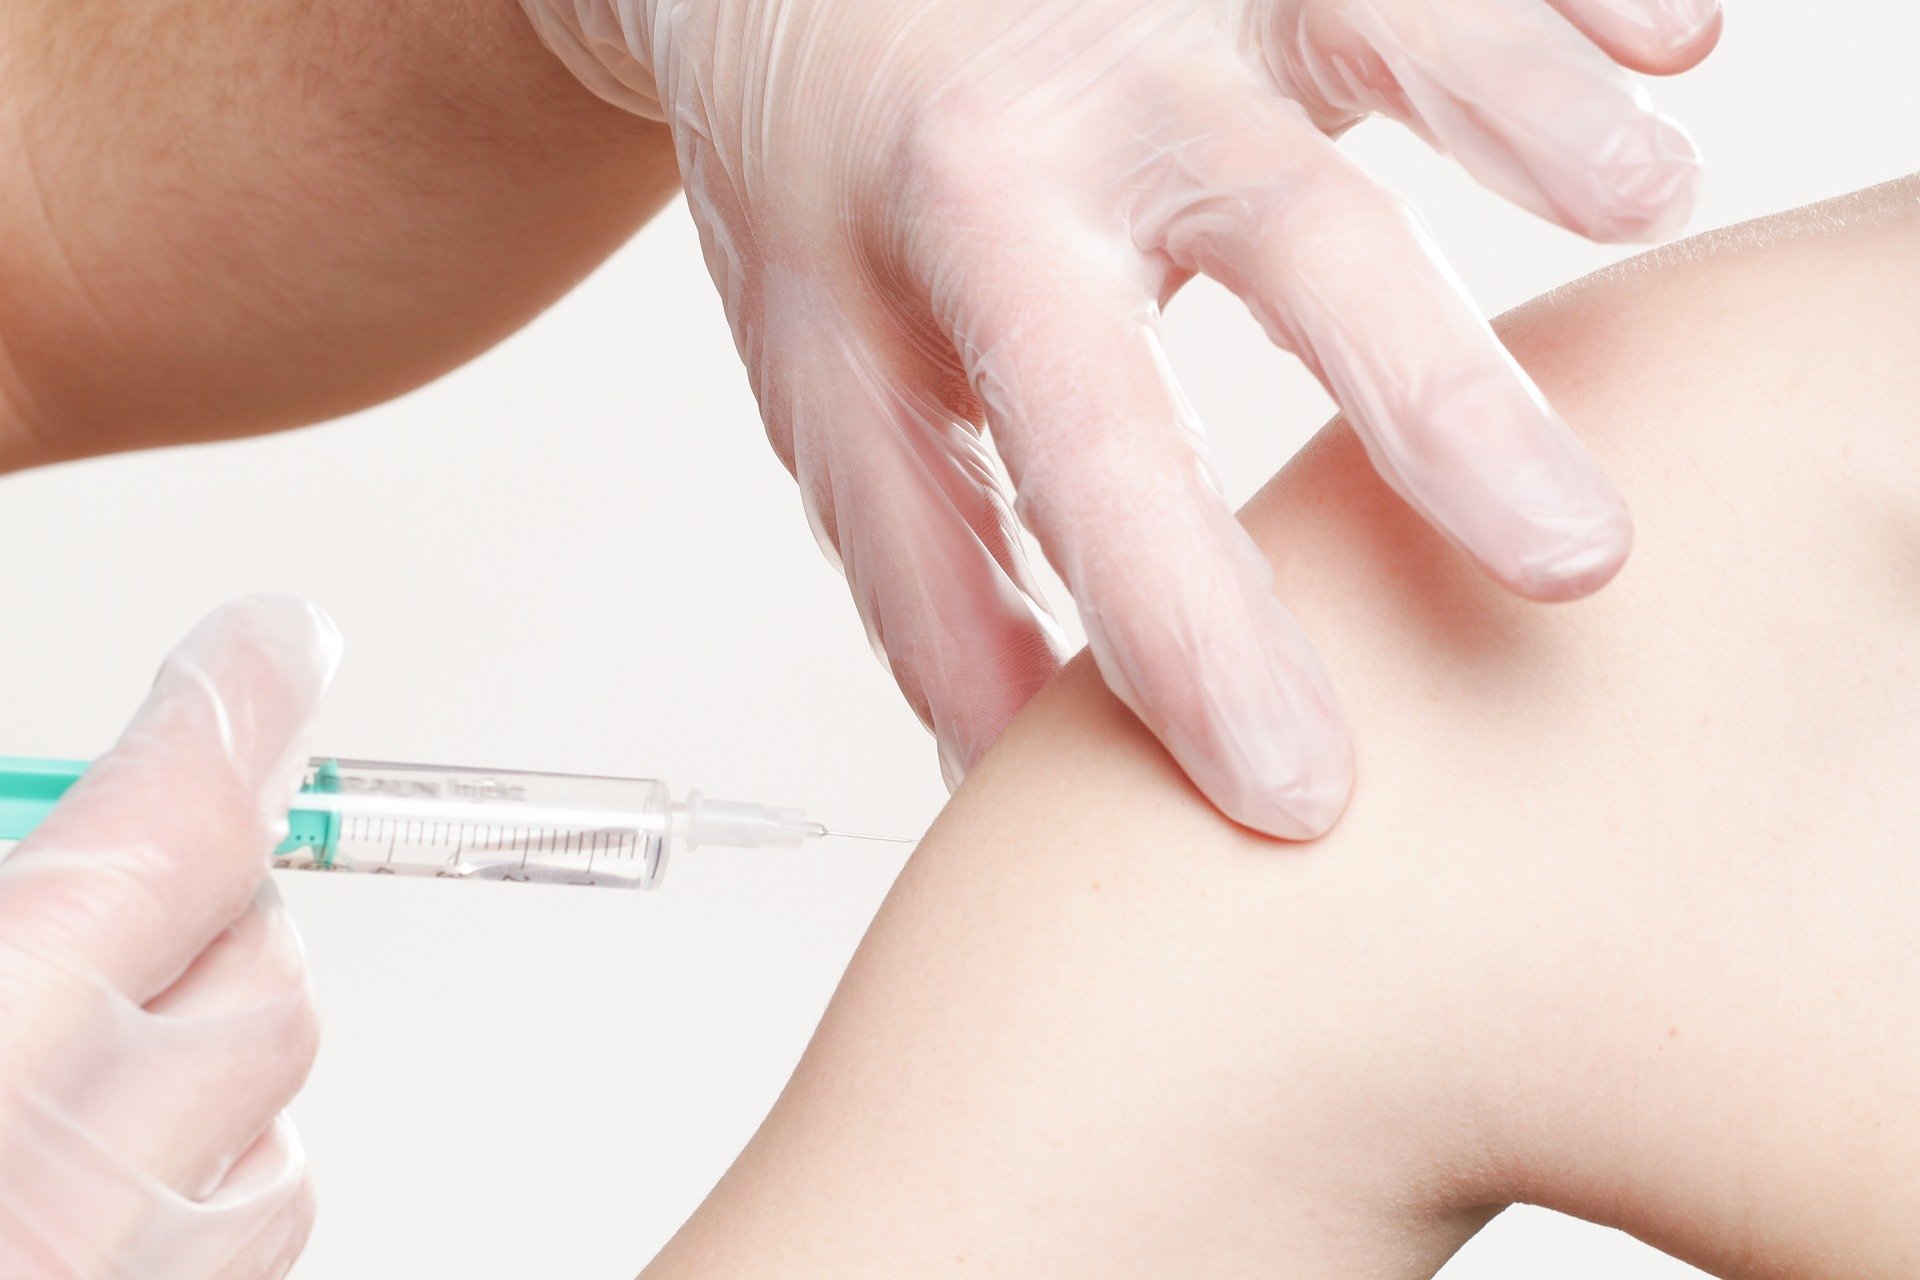 Symbolbild einer Impfung; Copyright: Angelo Esslinger/pixabay.com